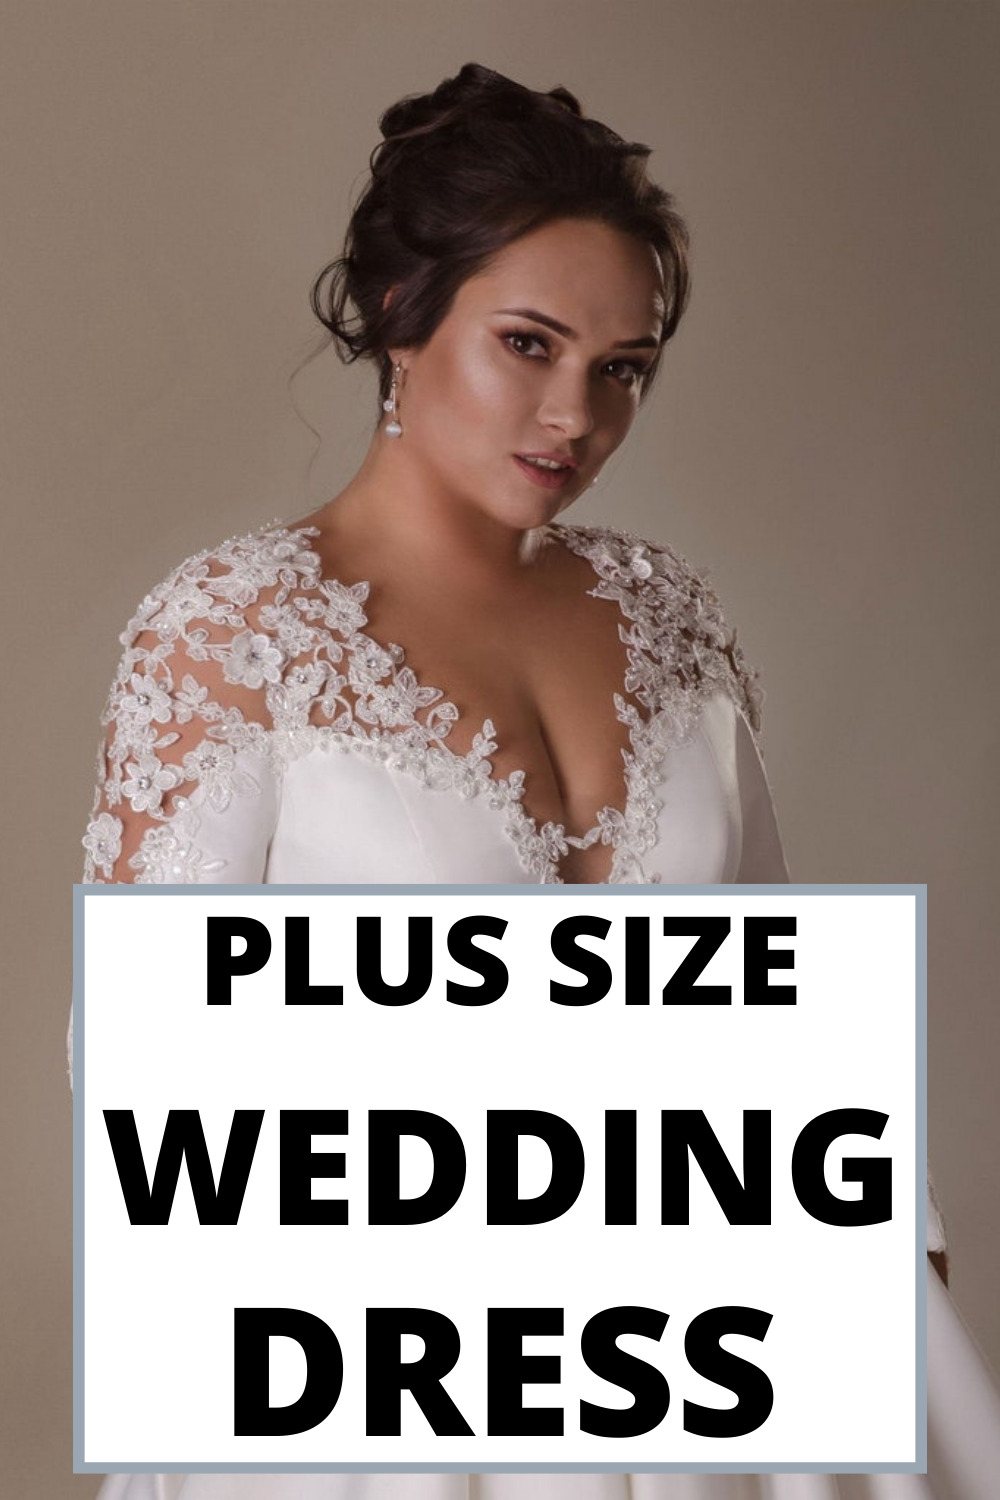 Flattering Wedding Dress For Plus Size